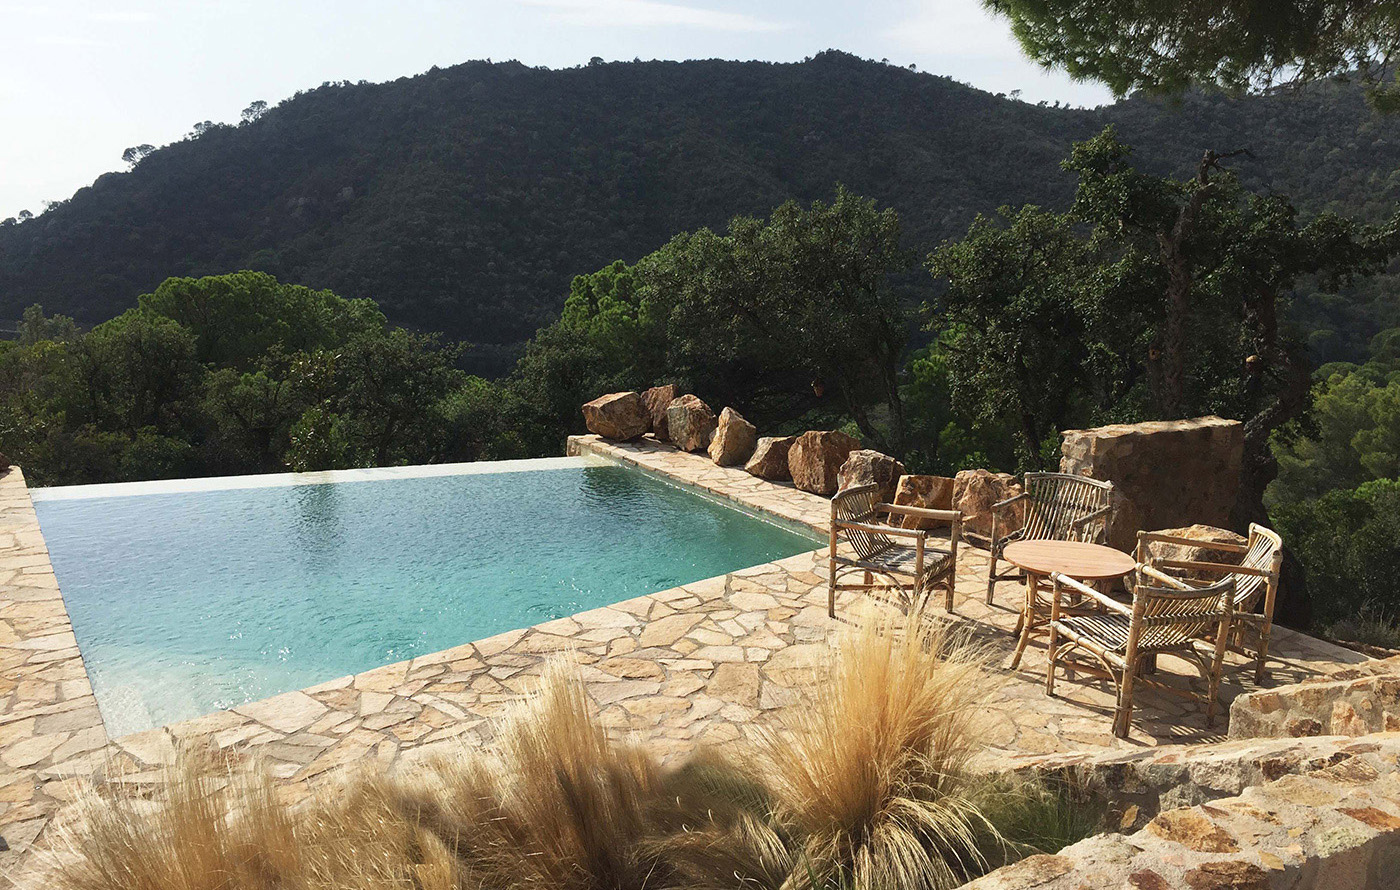 A luxury infinity pool in landscaped garden in Tossa de Mar Costa Brava